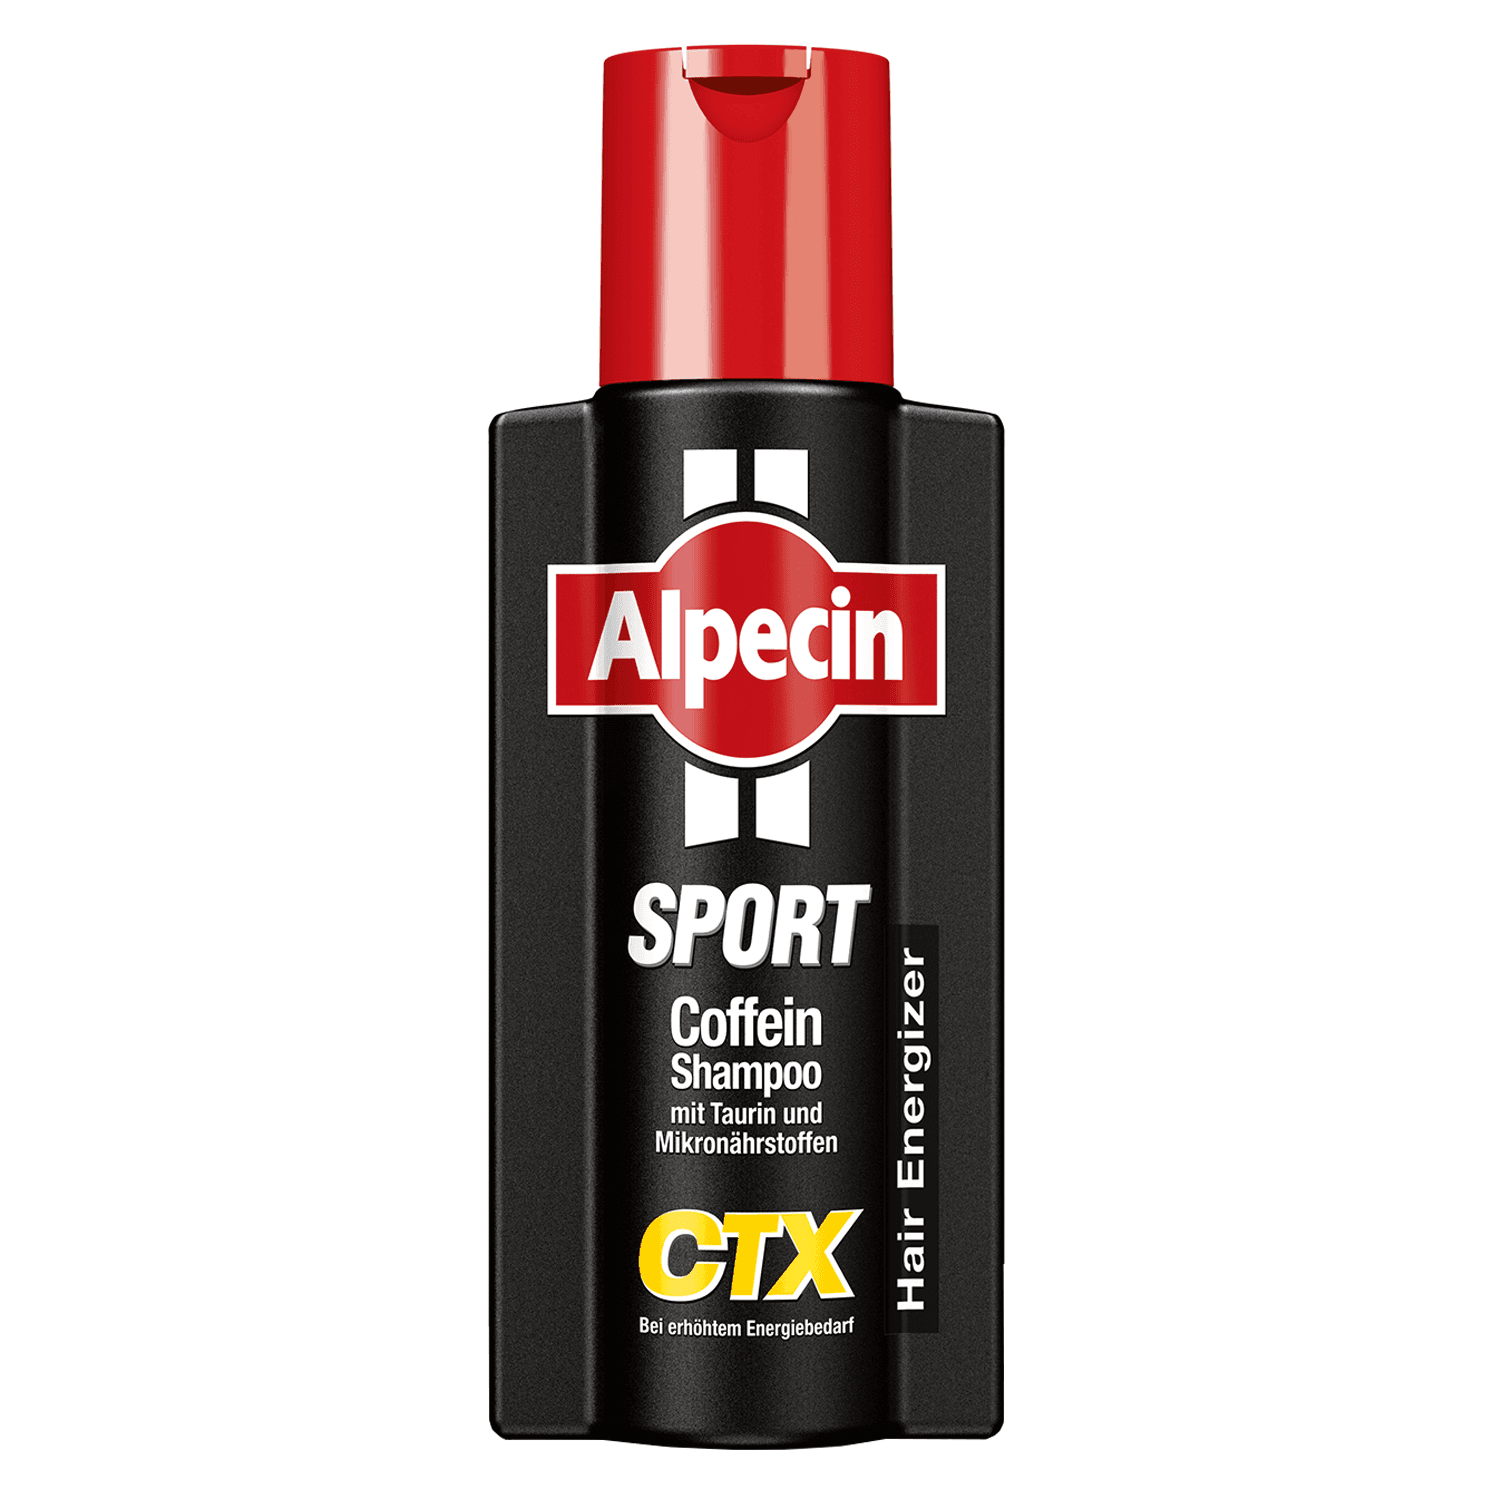 Alpecin - Sport Caffeine Shampoo CTX